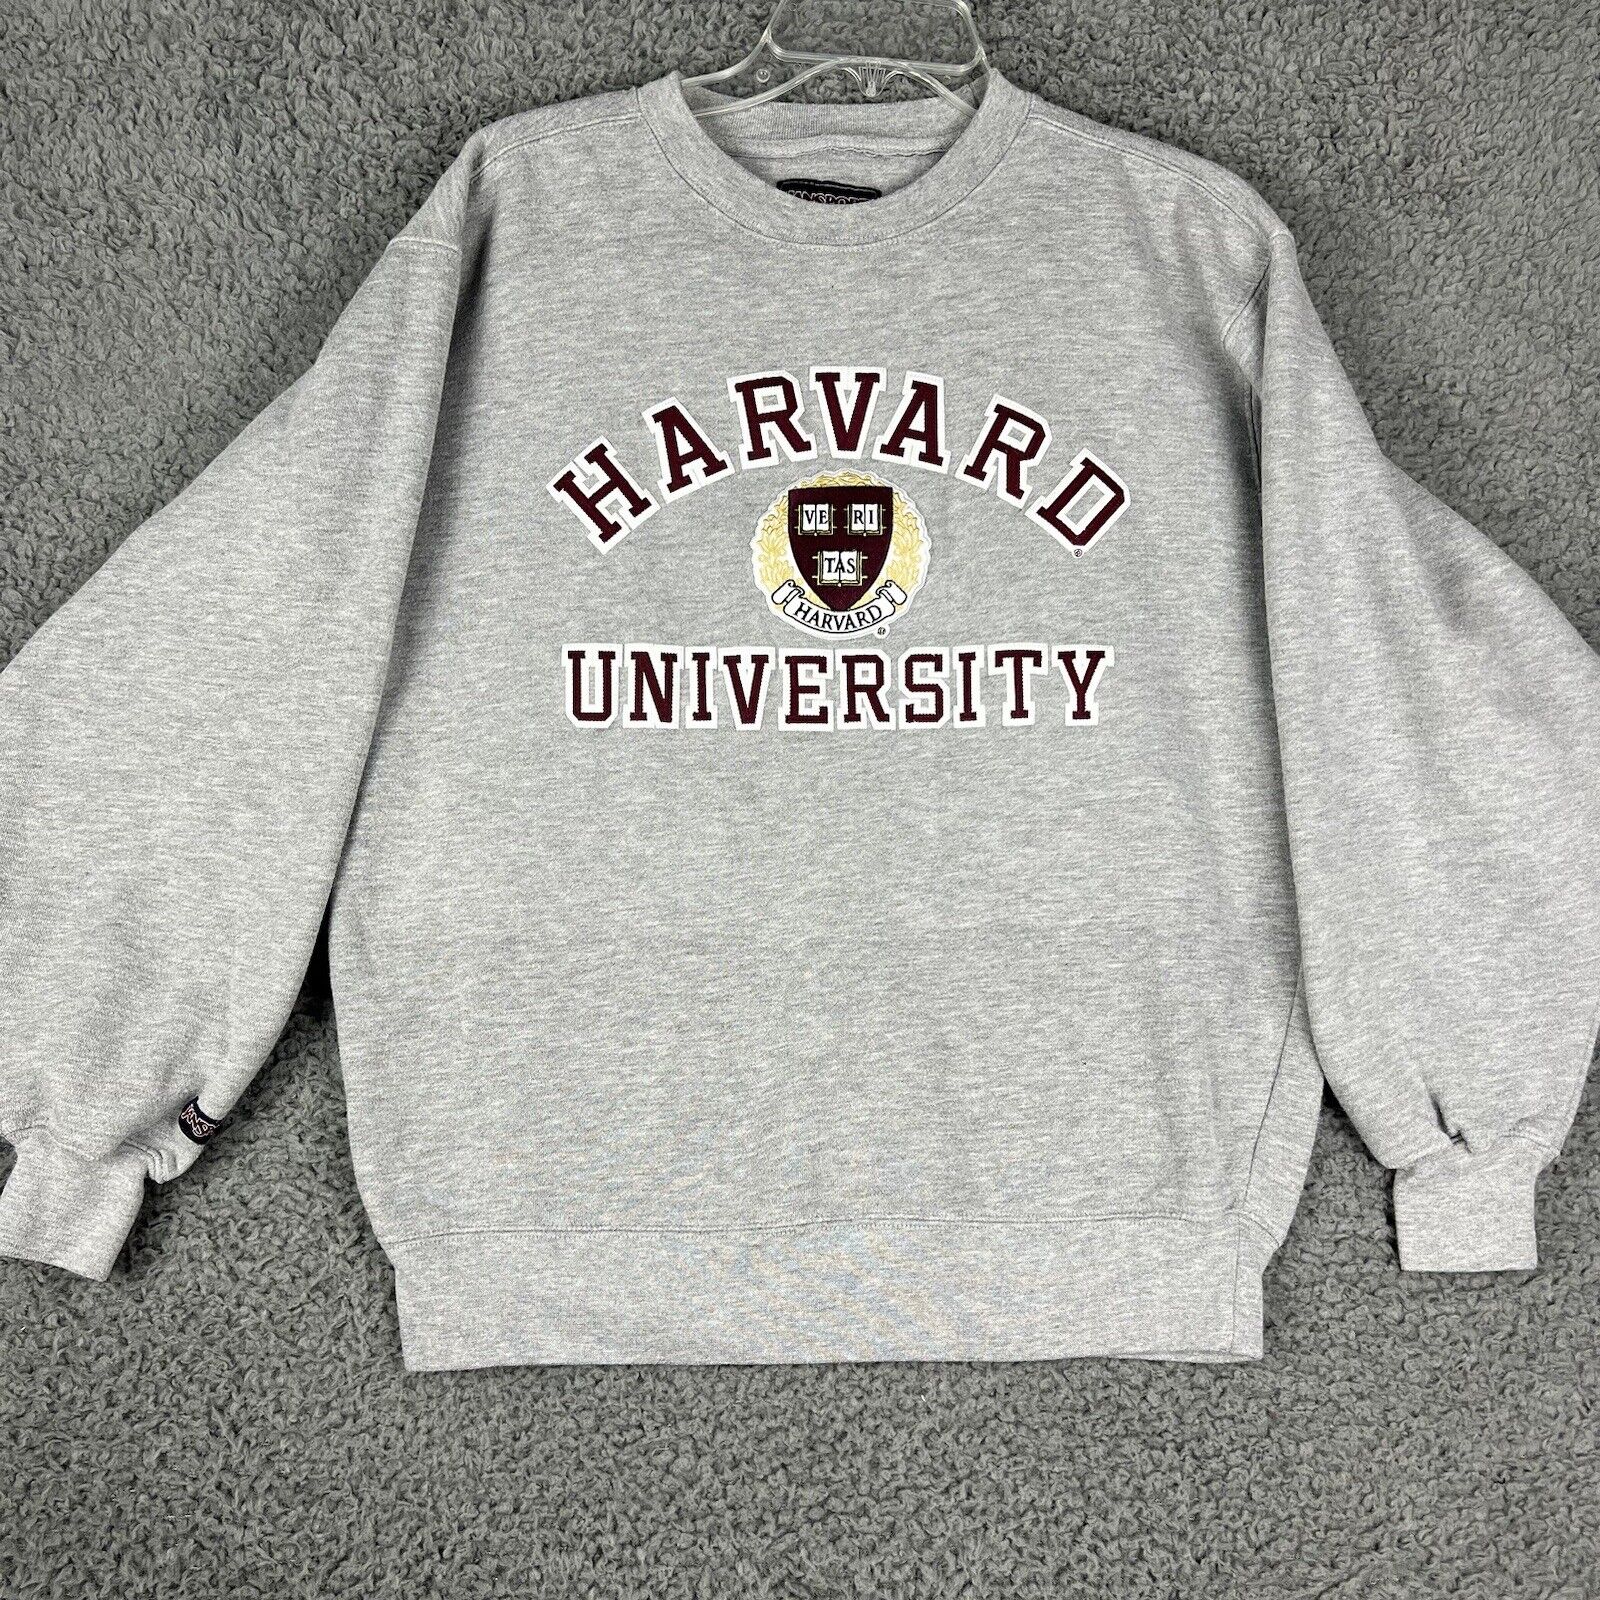 Vintage Jansport Harvard University Sweatshirt Unisex Medium Crewneck Gray 90s